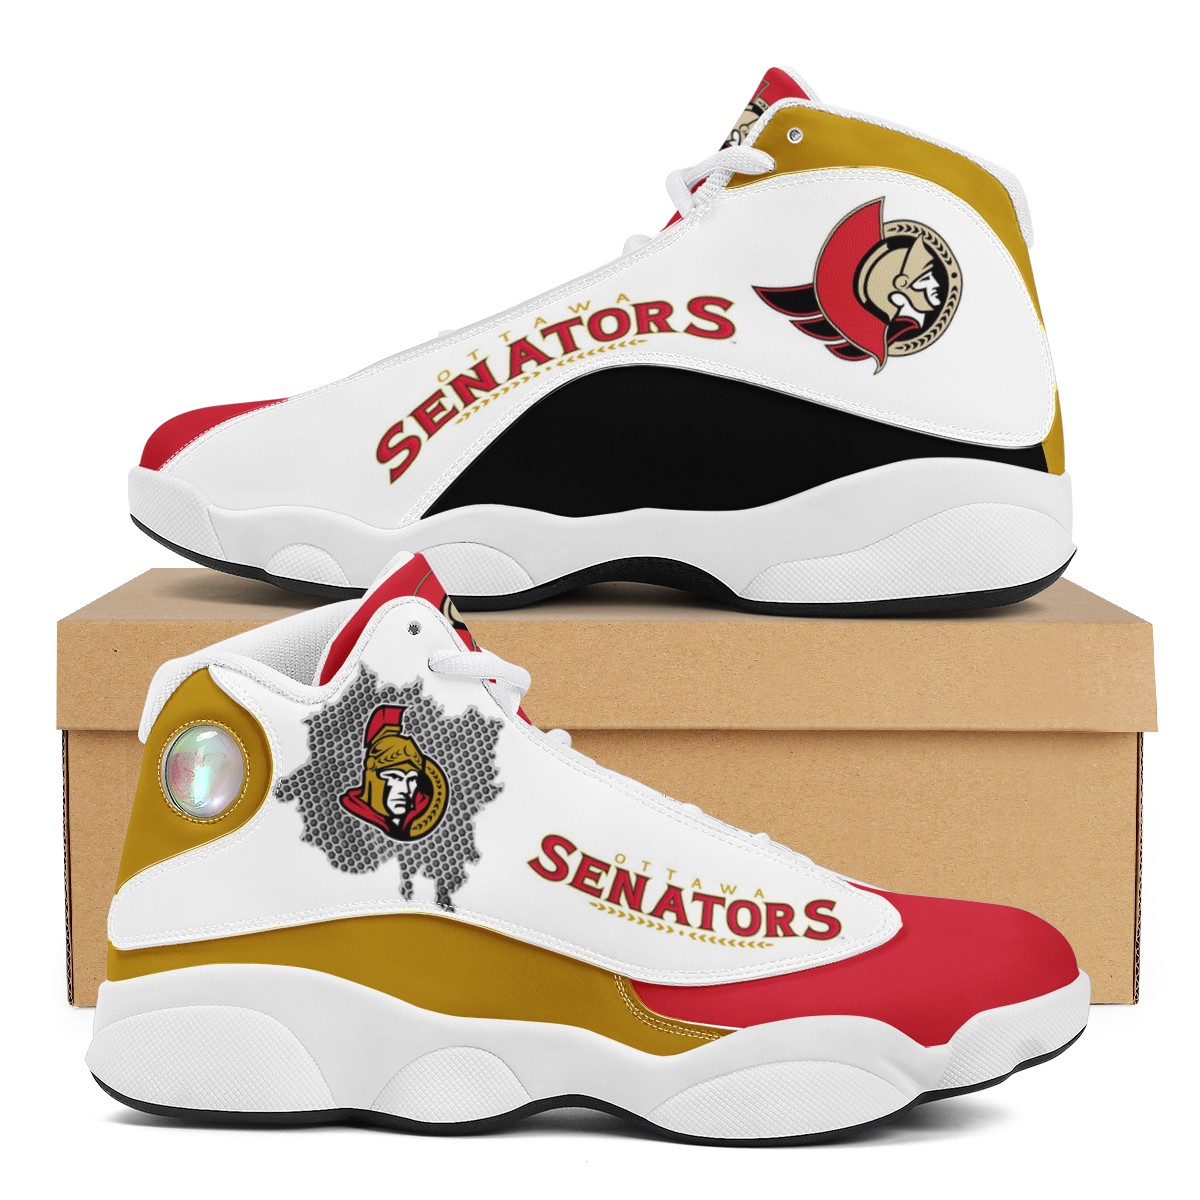 Women's Ottawa Senators Limited Edition JD13 Sneakers 001